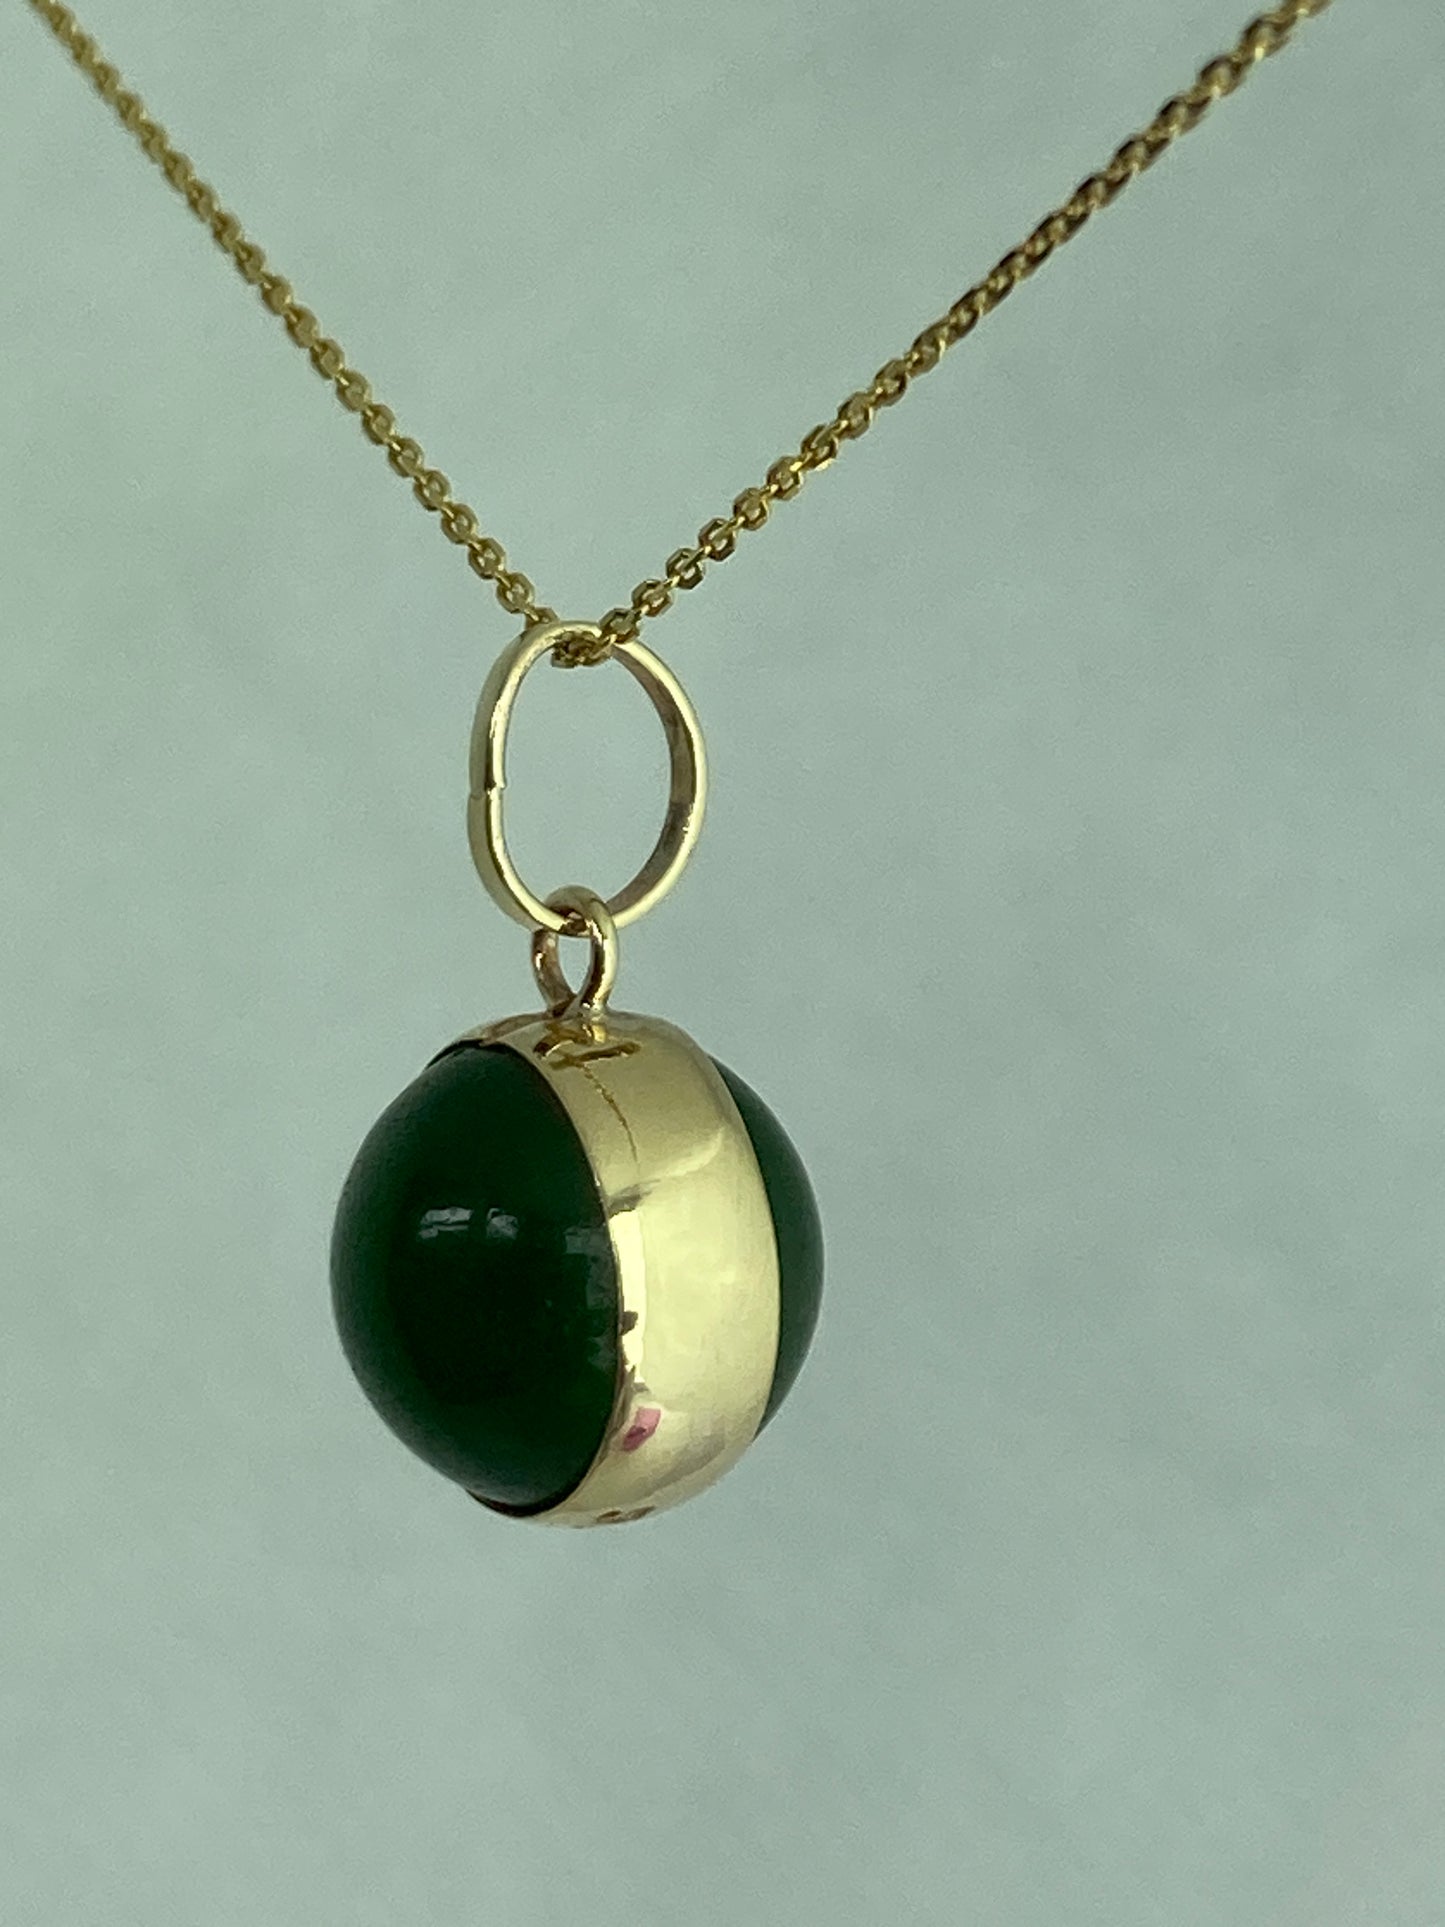 9ct gold Green jade pendant, 18” chain